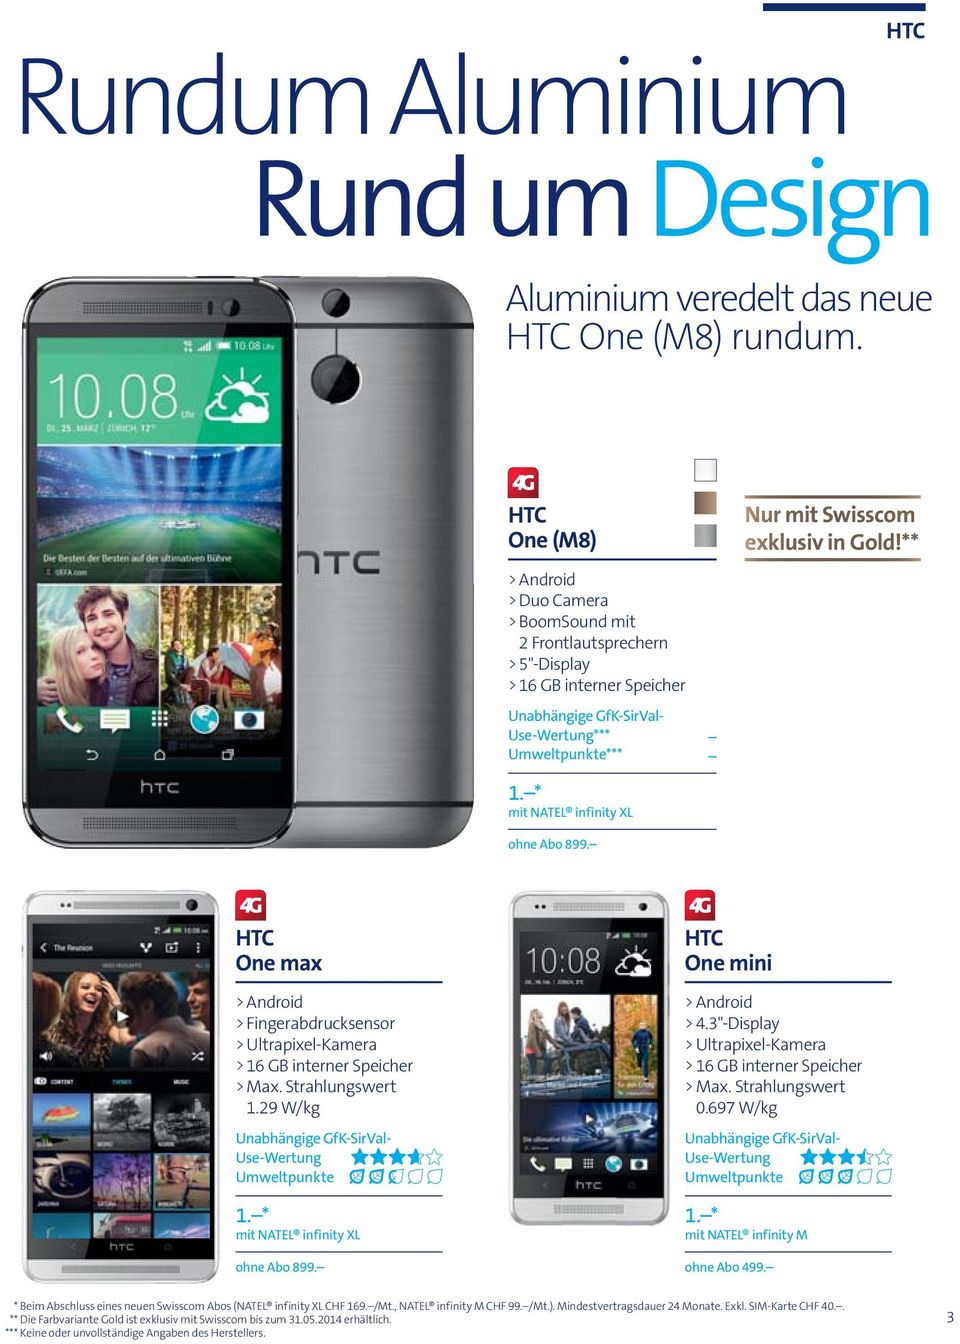 HTC One max > Android > Fingerabdrucksensor > Ultrapixel-Kamera > 16 GB interner Speicher 1.29 W/kg mit NATEL infinity XL ohne Abo 899. HTC One mini > Android > 4.